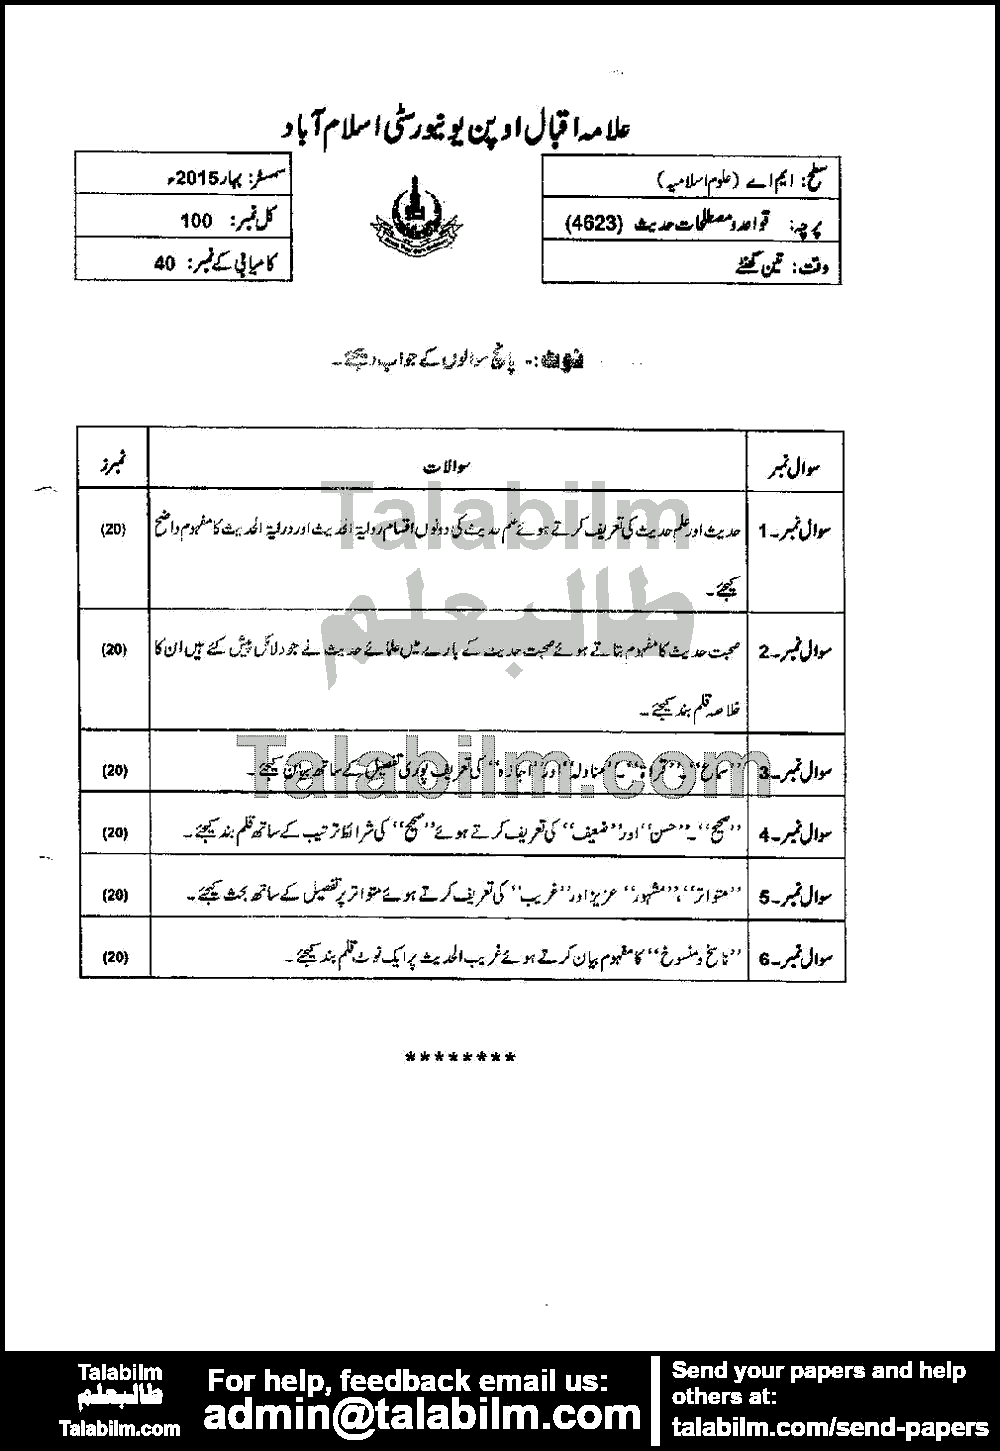 Al-Qawaid Fil Hadith-I 4623 past paper for Spring 2015